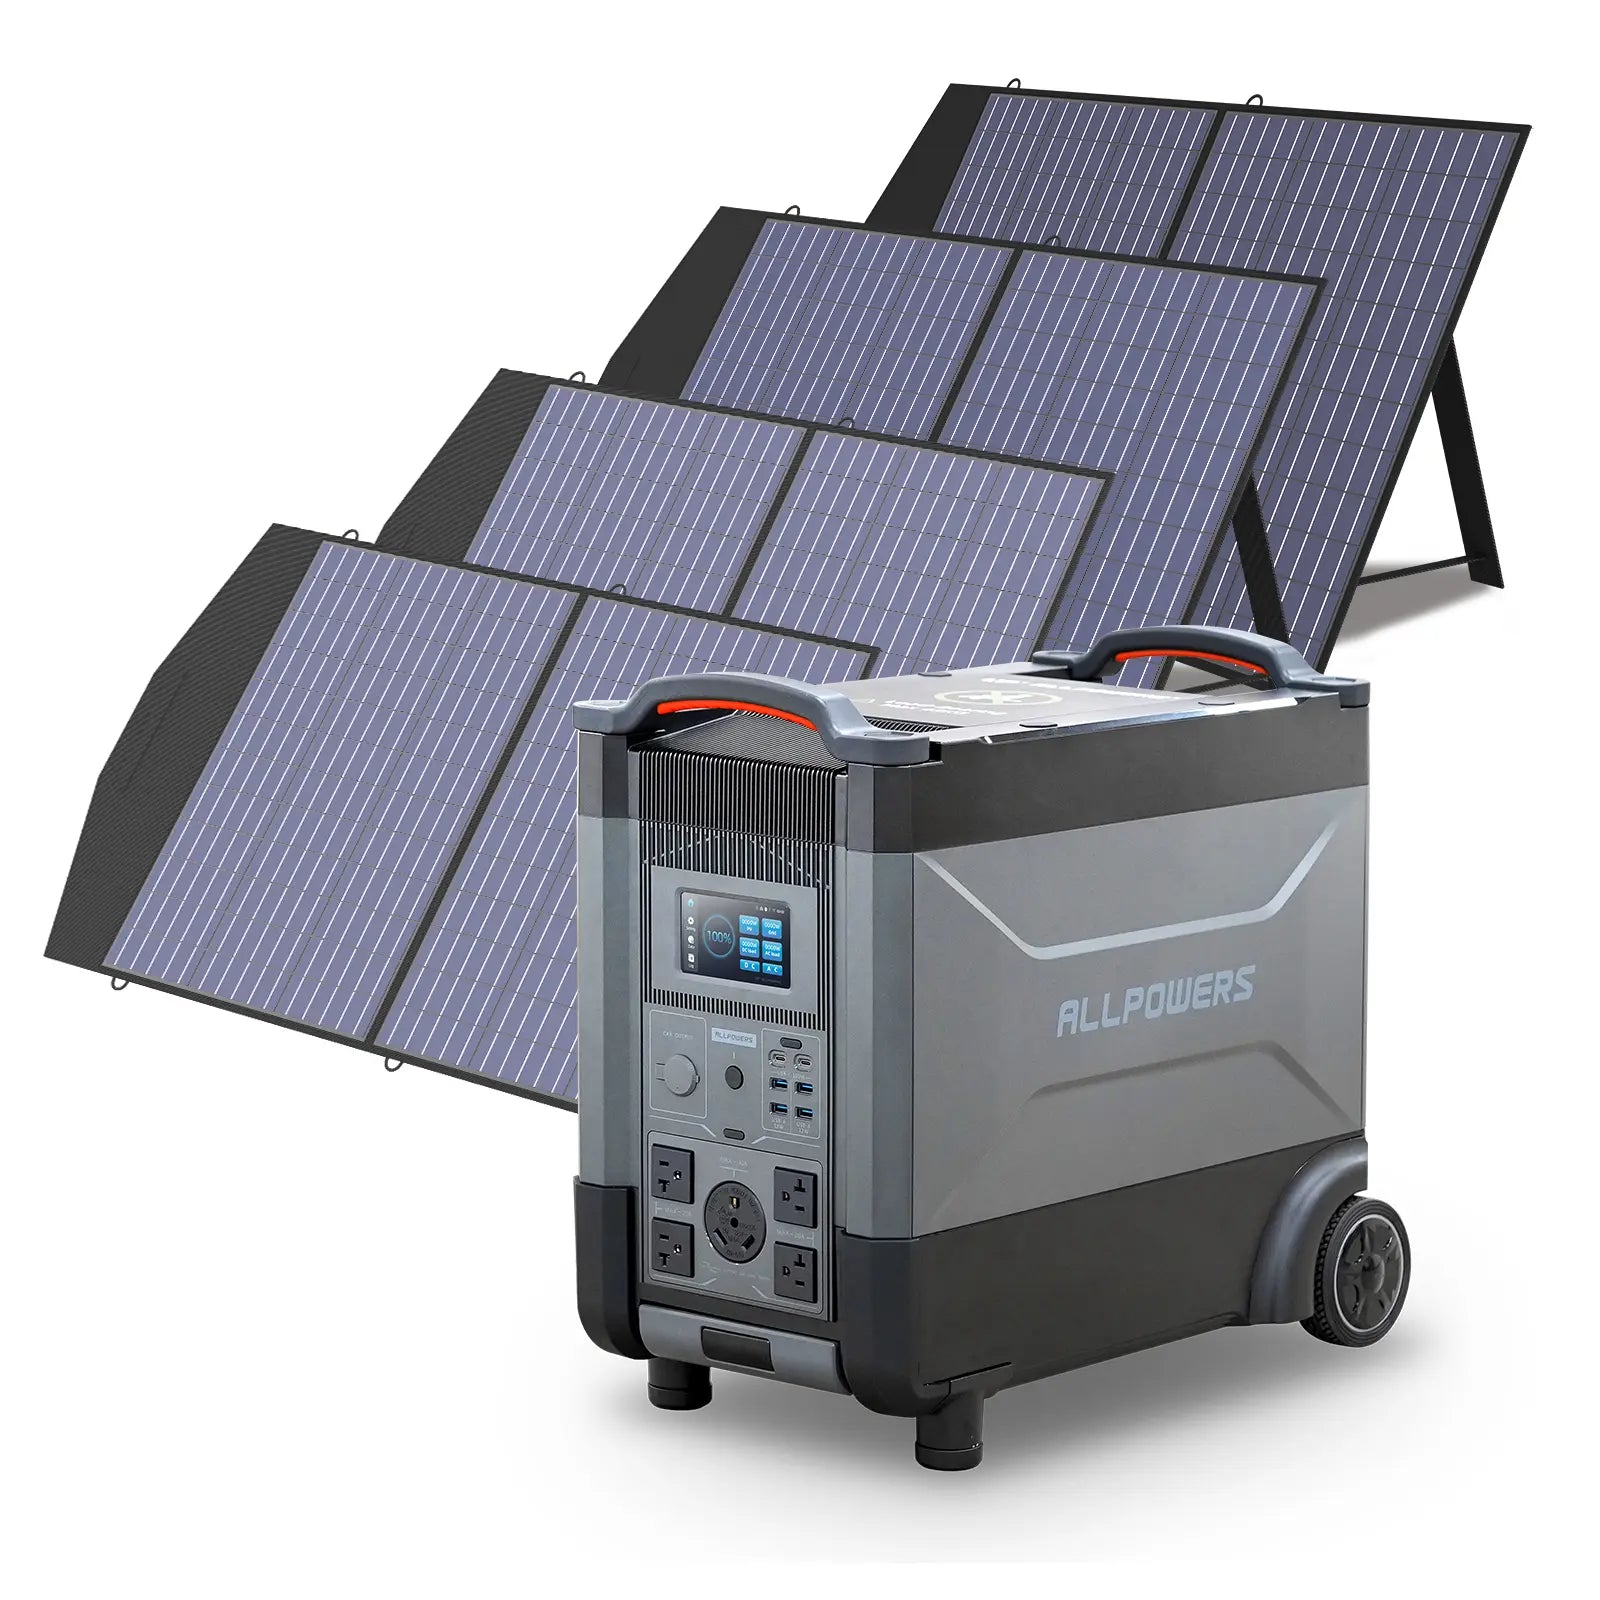 ALLPOWERS Solar Generator Kit 4000W (R4000 + 4 x SP027 100W Solar Panel)